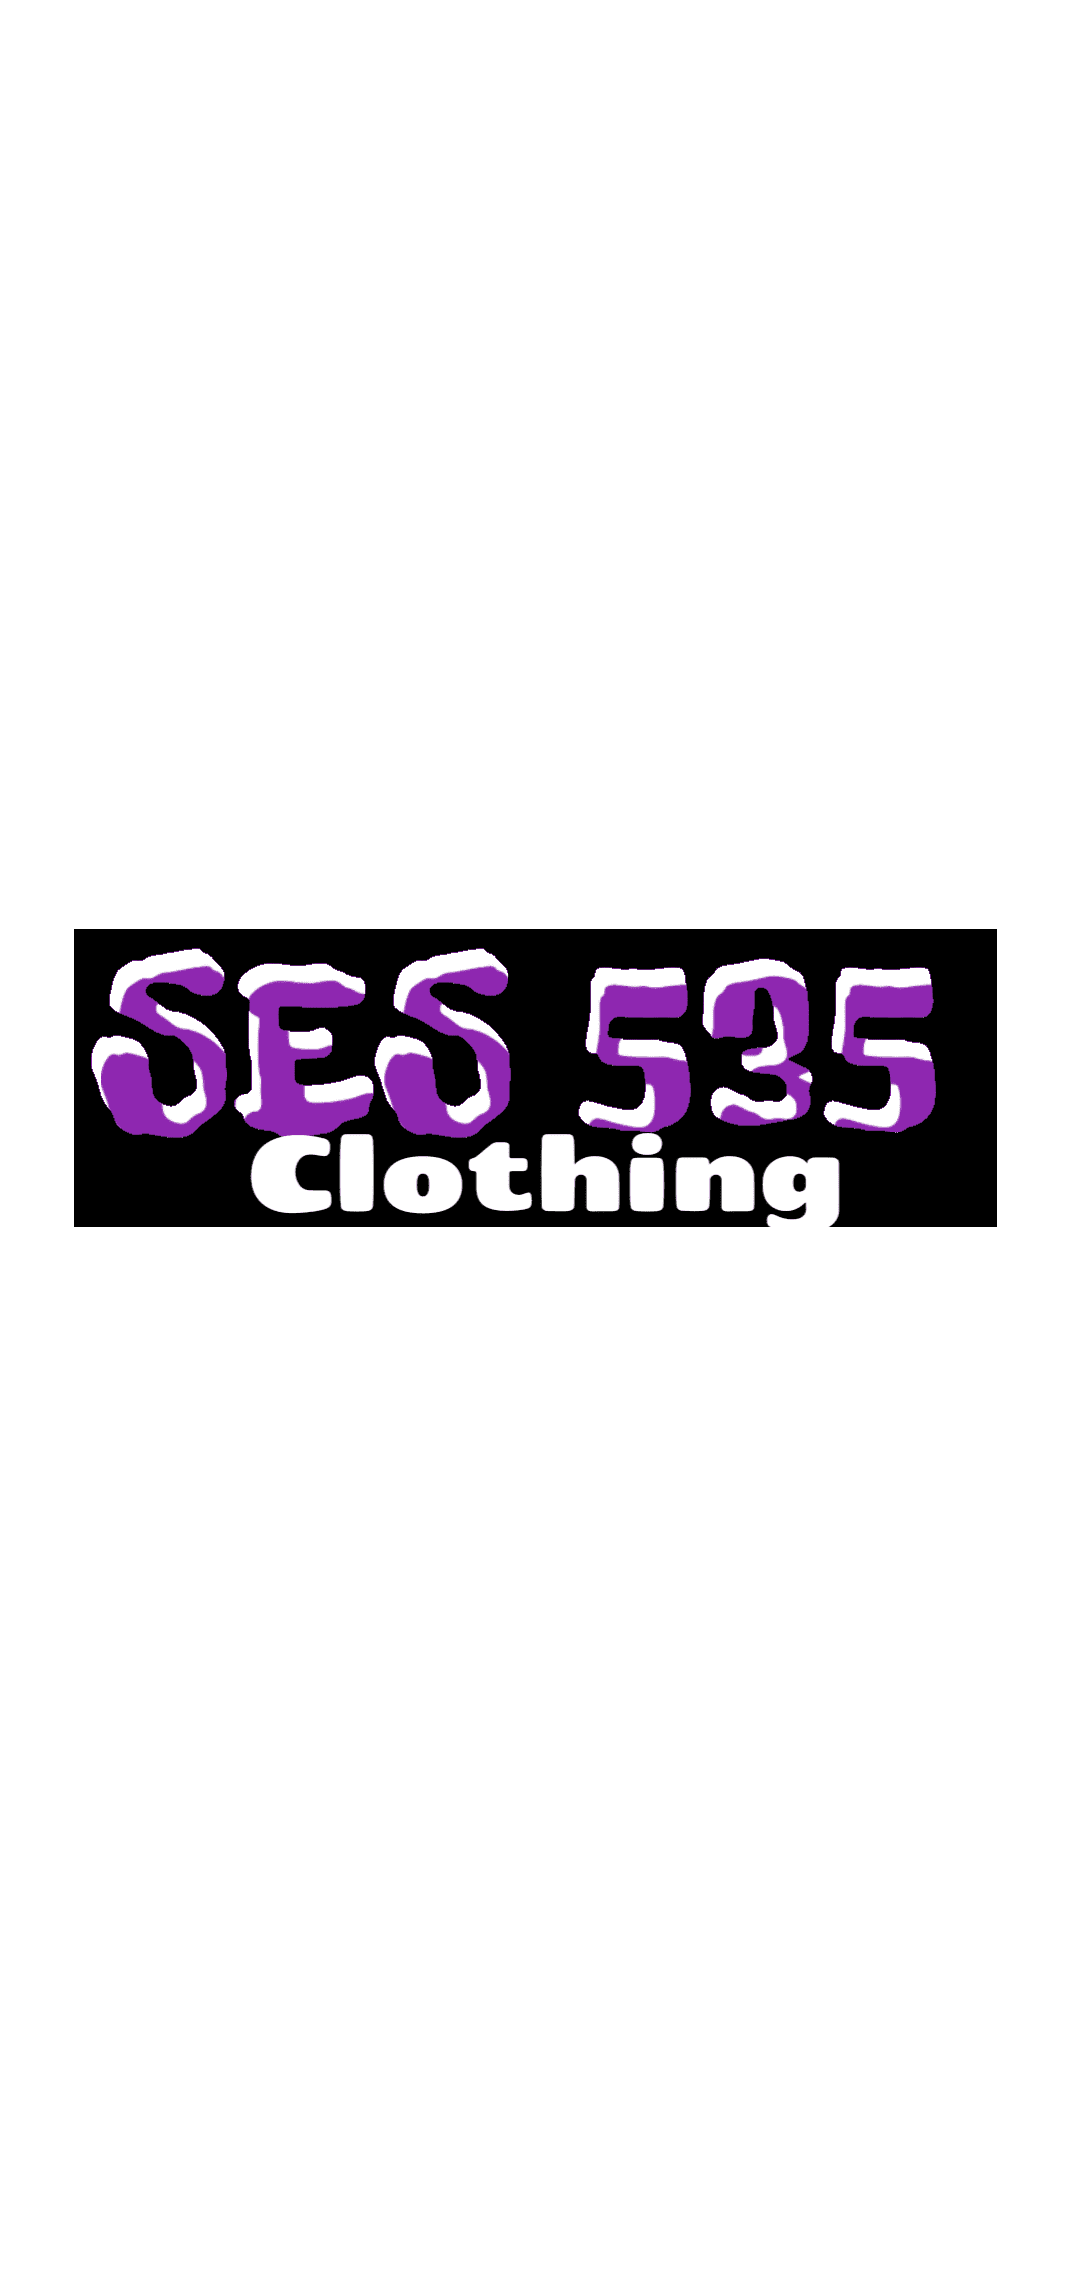 Ses535 clothing